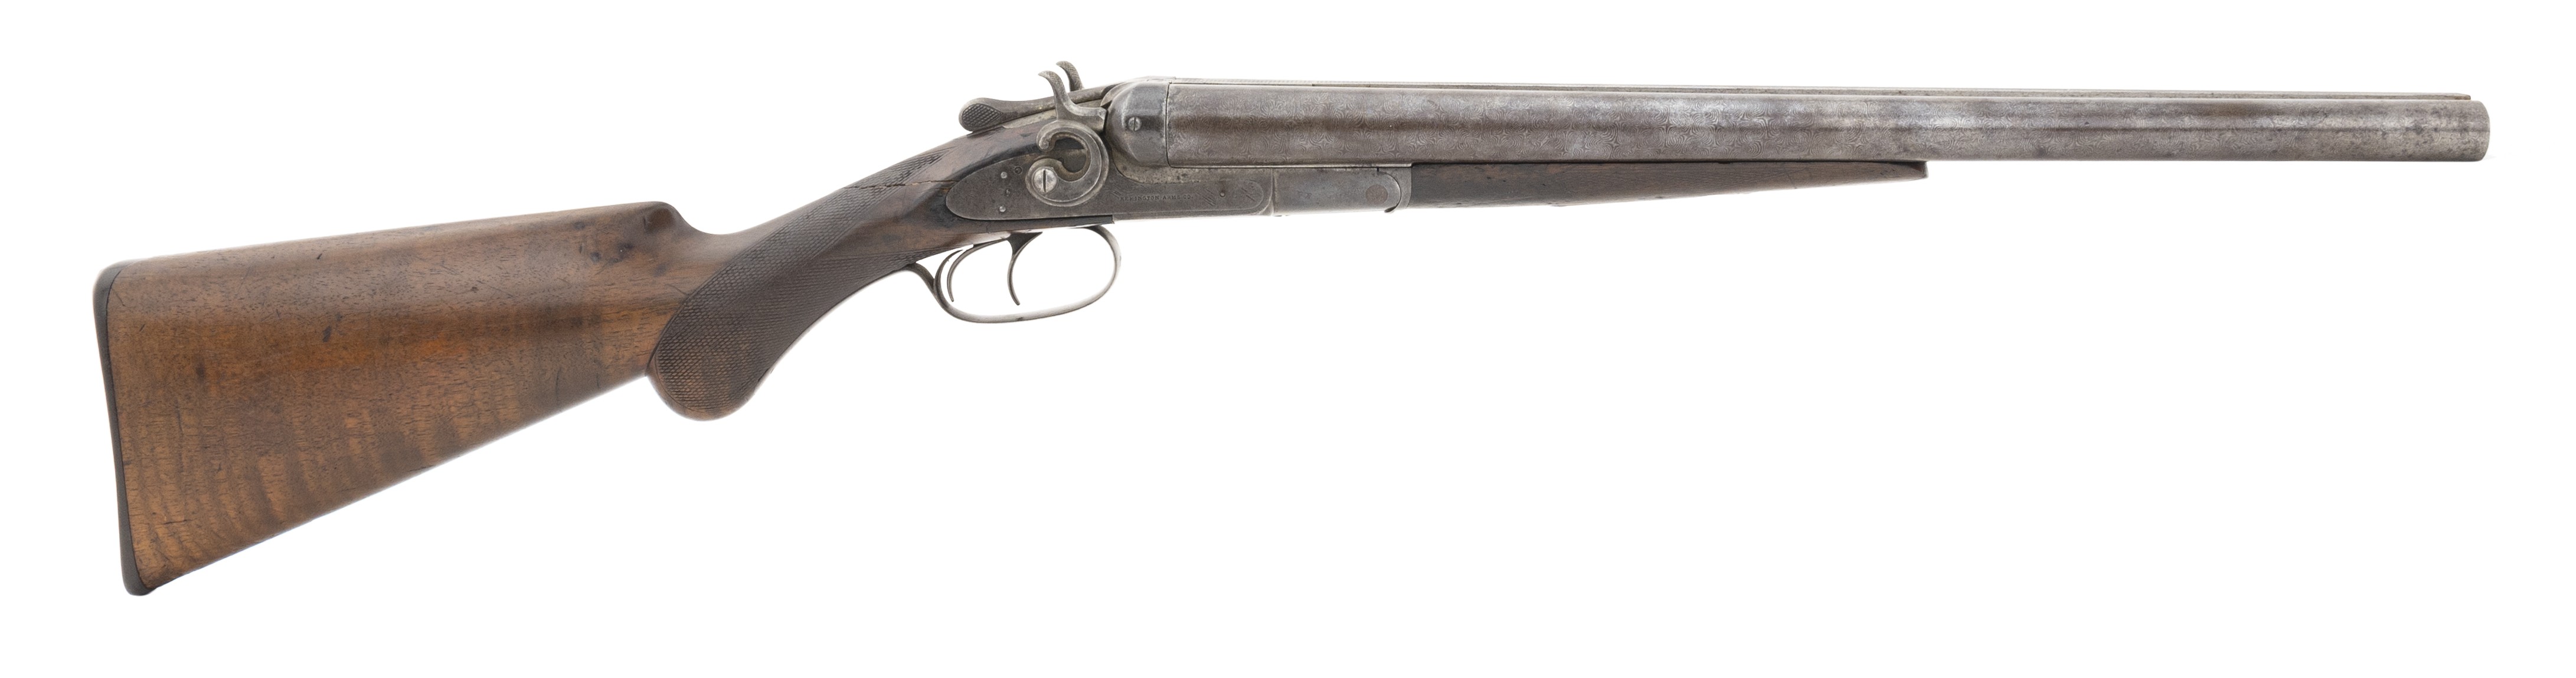 Remington 1889 Damascus Hammer Coach Gun 10 Gauge shotgun for sale.